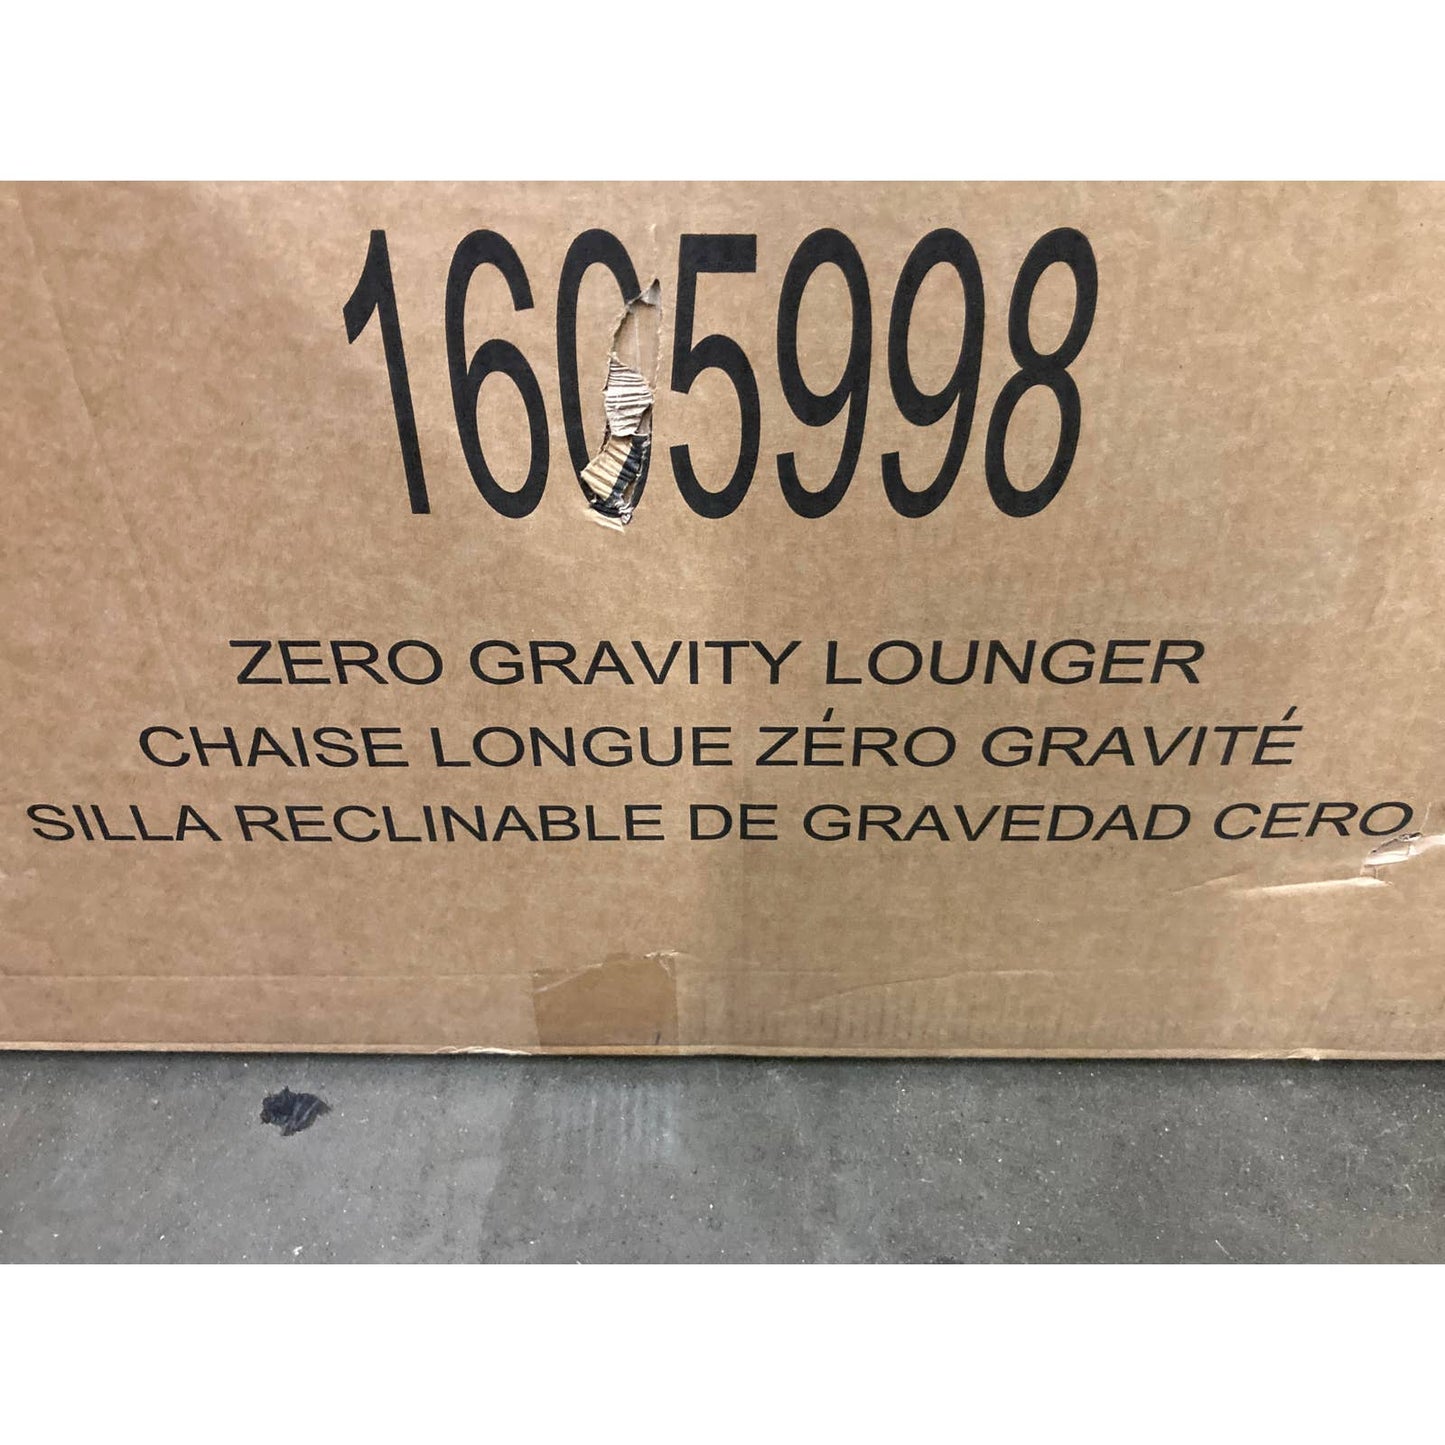 Costco - Timber Ridge Zero Gravity Lounger - Retail $99